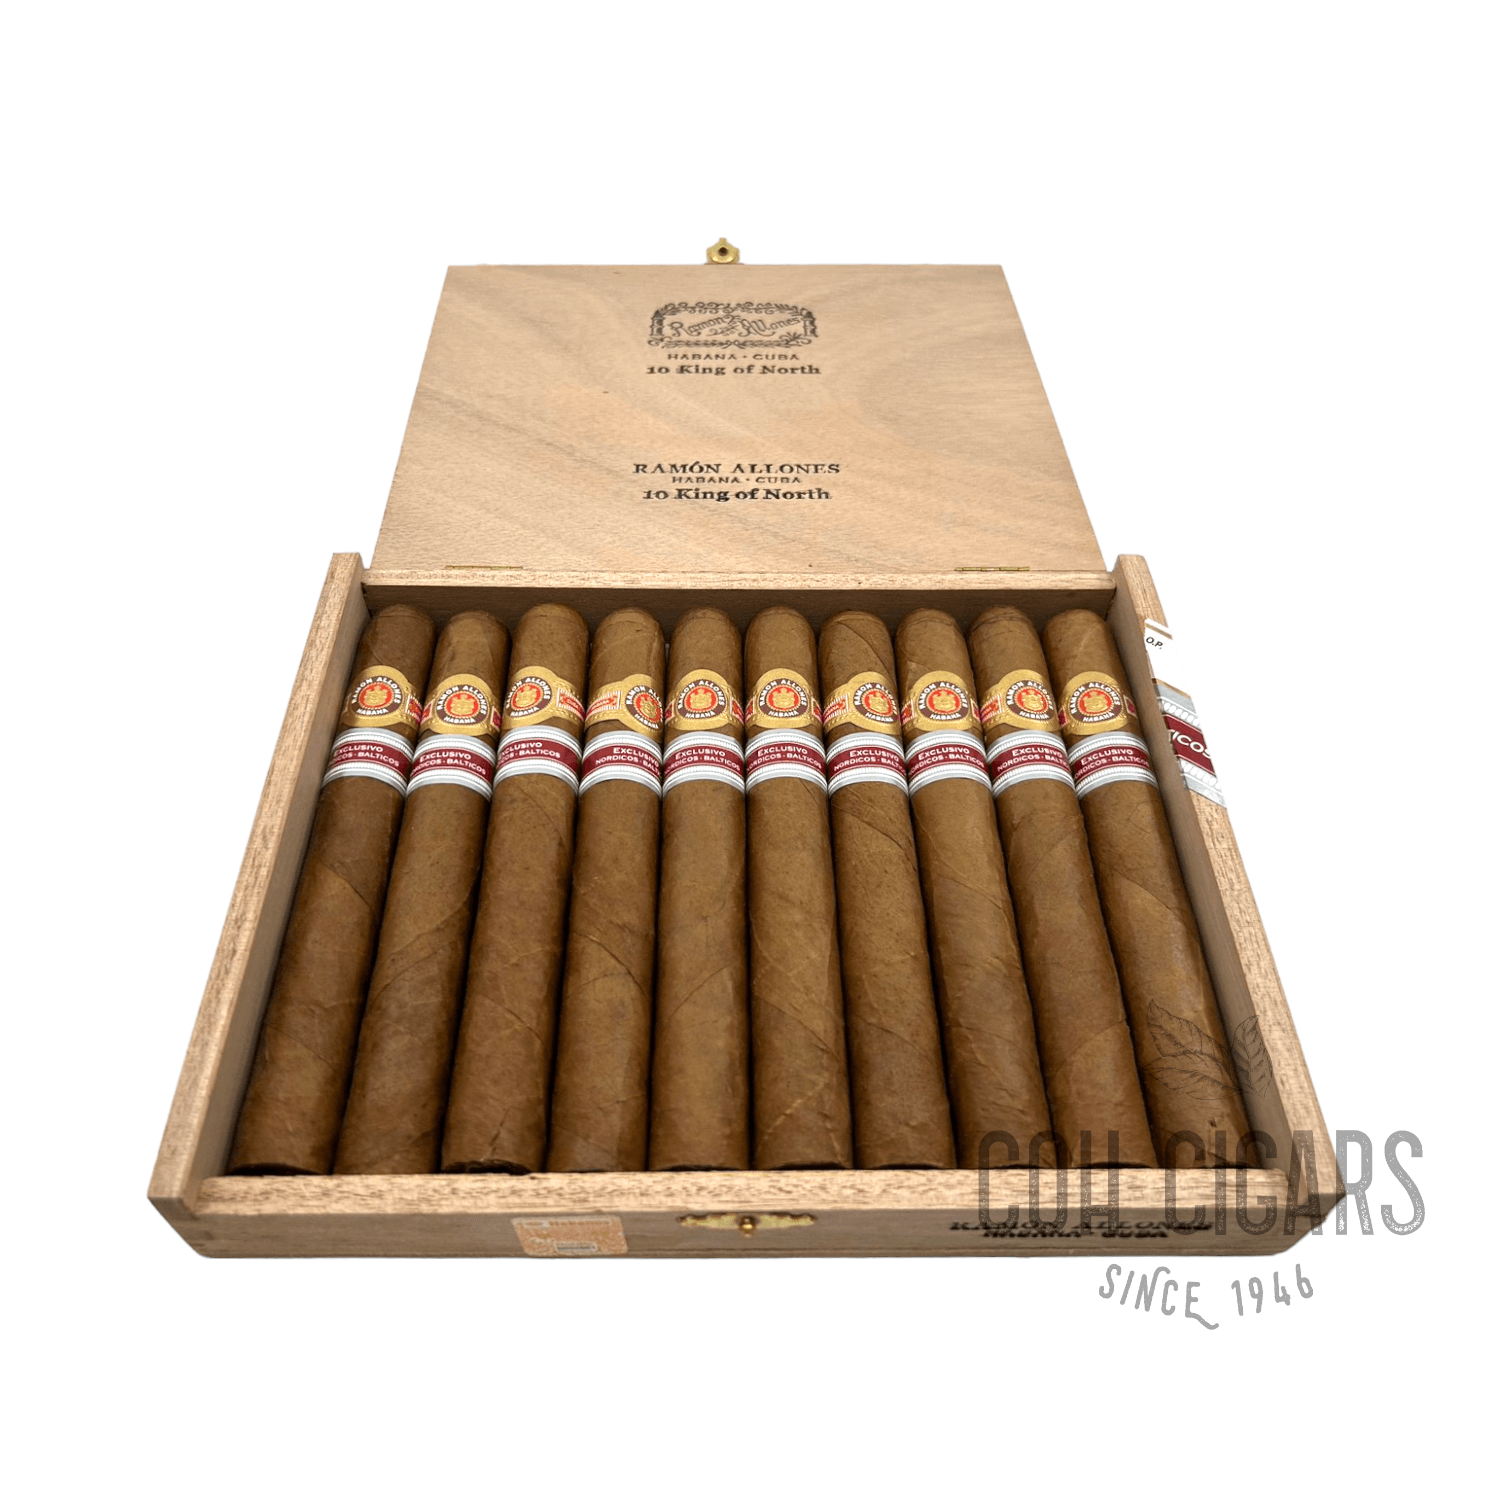 Ramon Allones Cigar | King of North Regional Edition Nordico & Baltico 2020 | Box 10 - hk.cohcigars